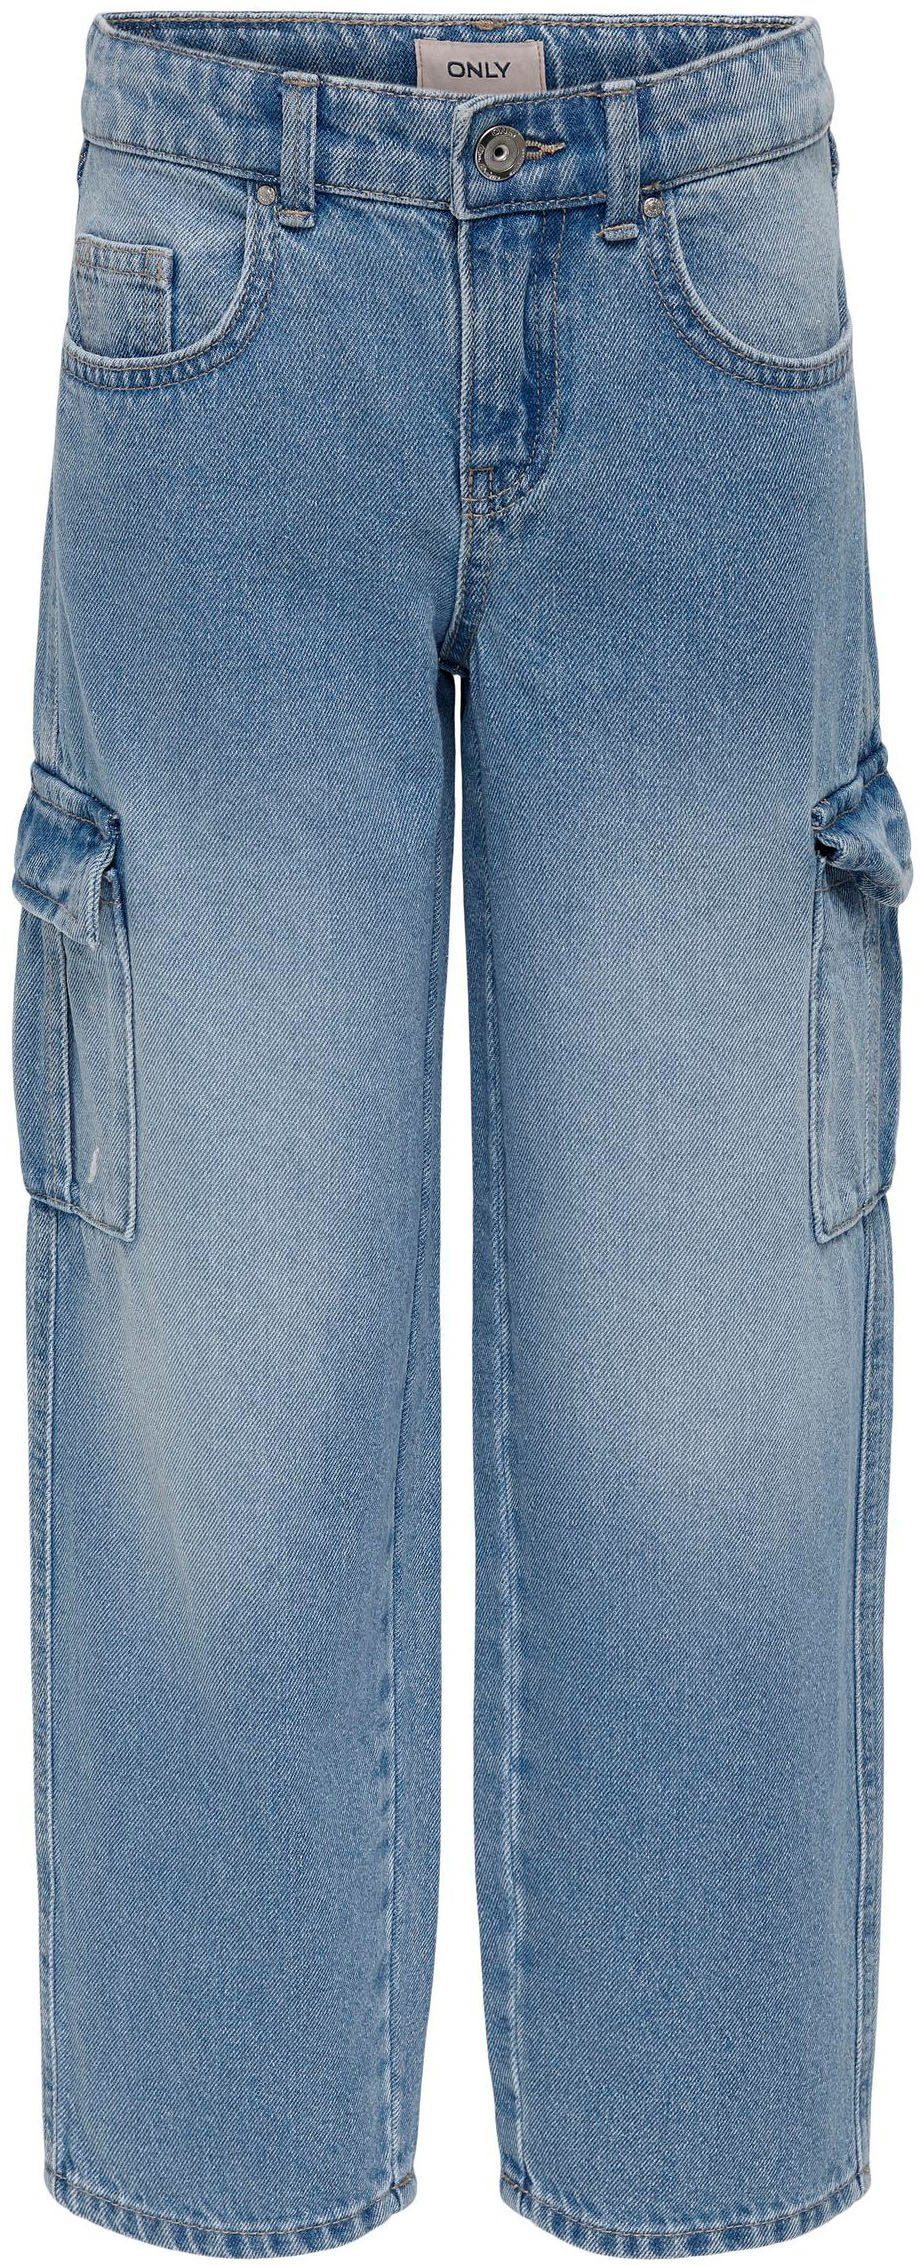 | PIM jeans NOOS OTTO CARROT makkelijk ONLY CARGO KOGHARMONY Cargo WIDE KIDS gekocht